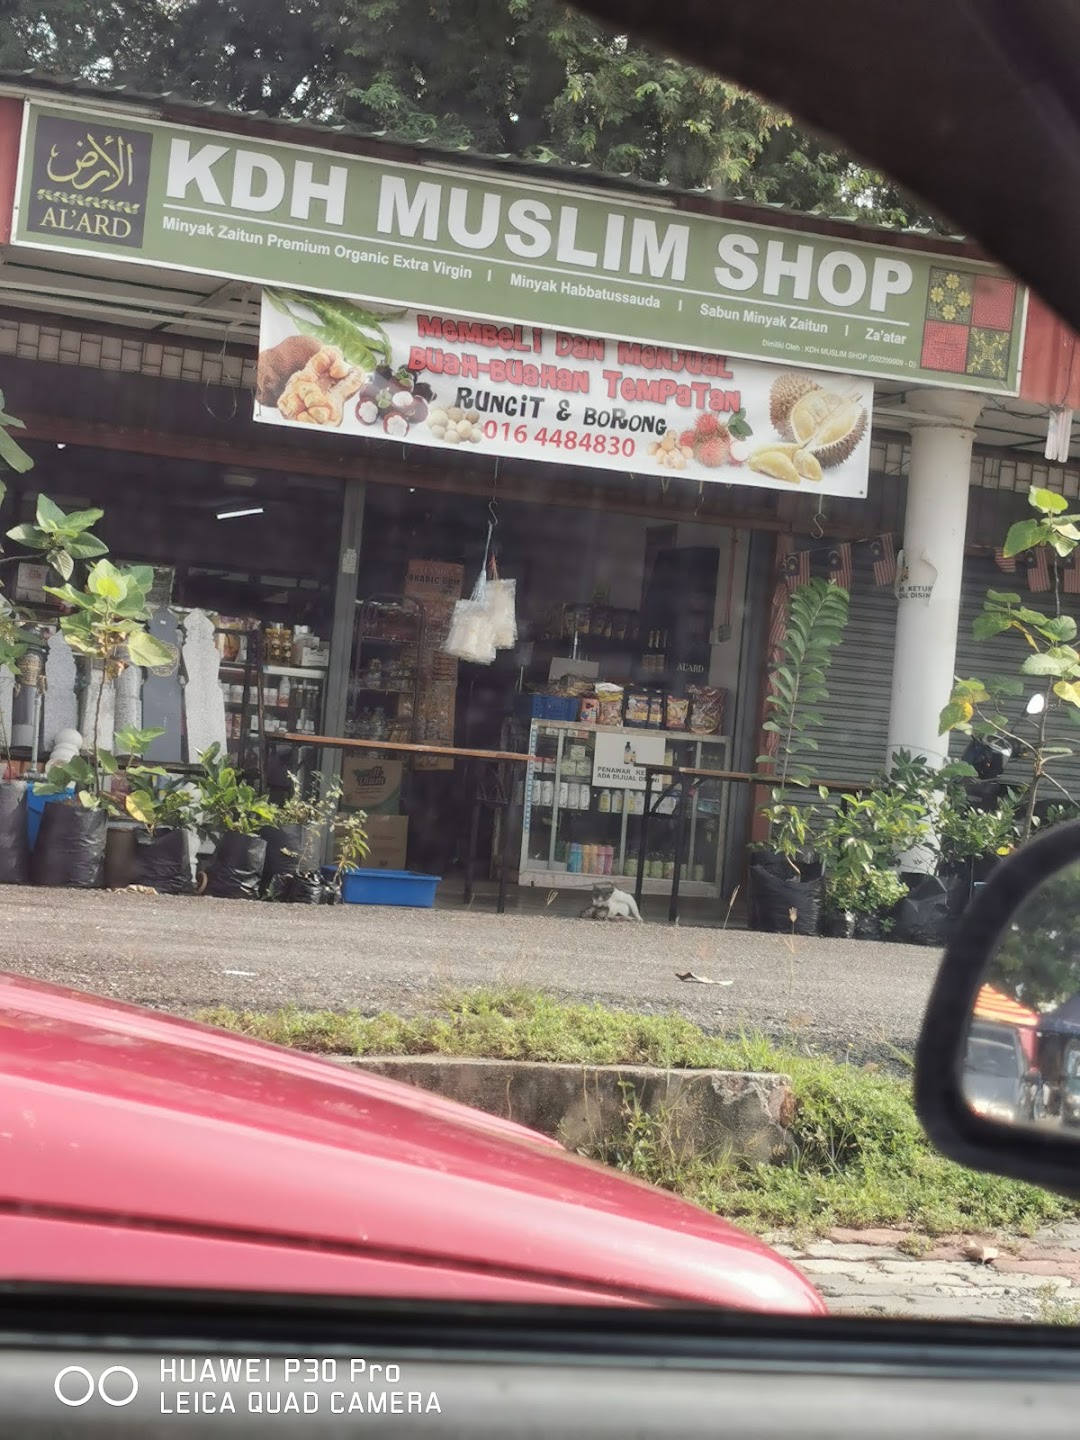 KDH Muslim shop